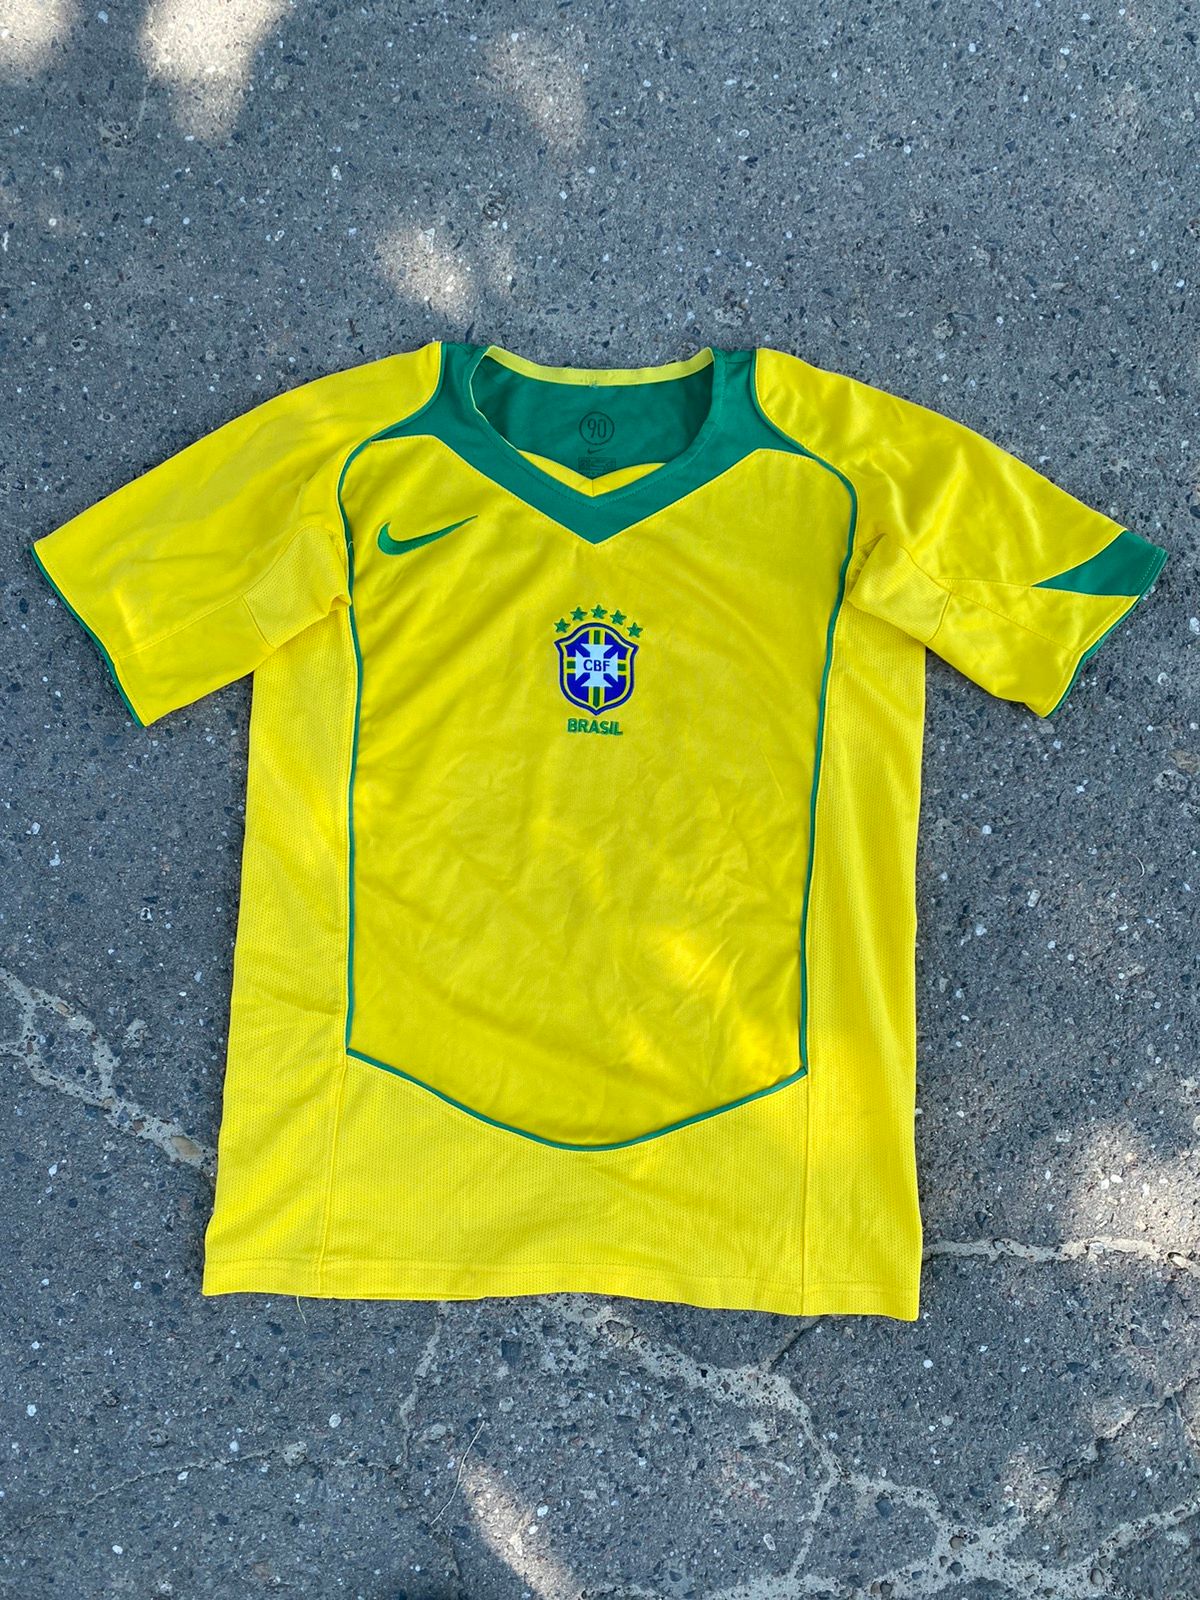 brazil football jersey nike